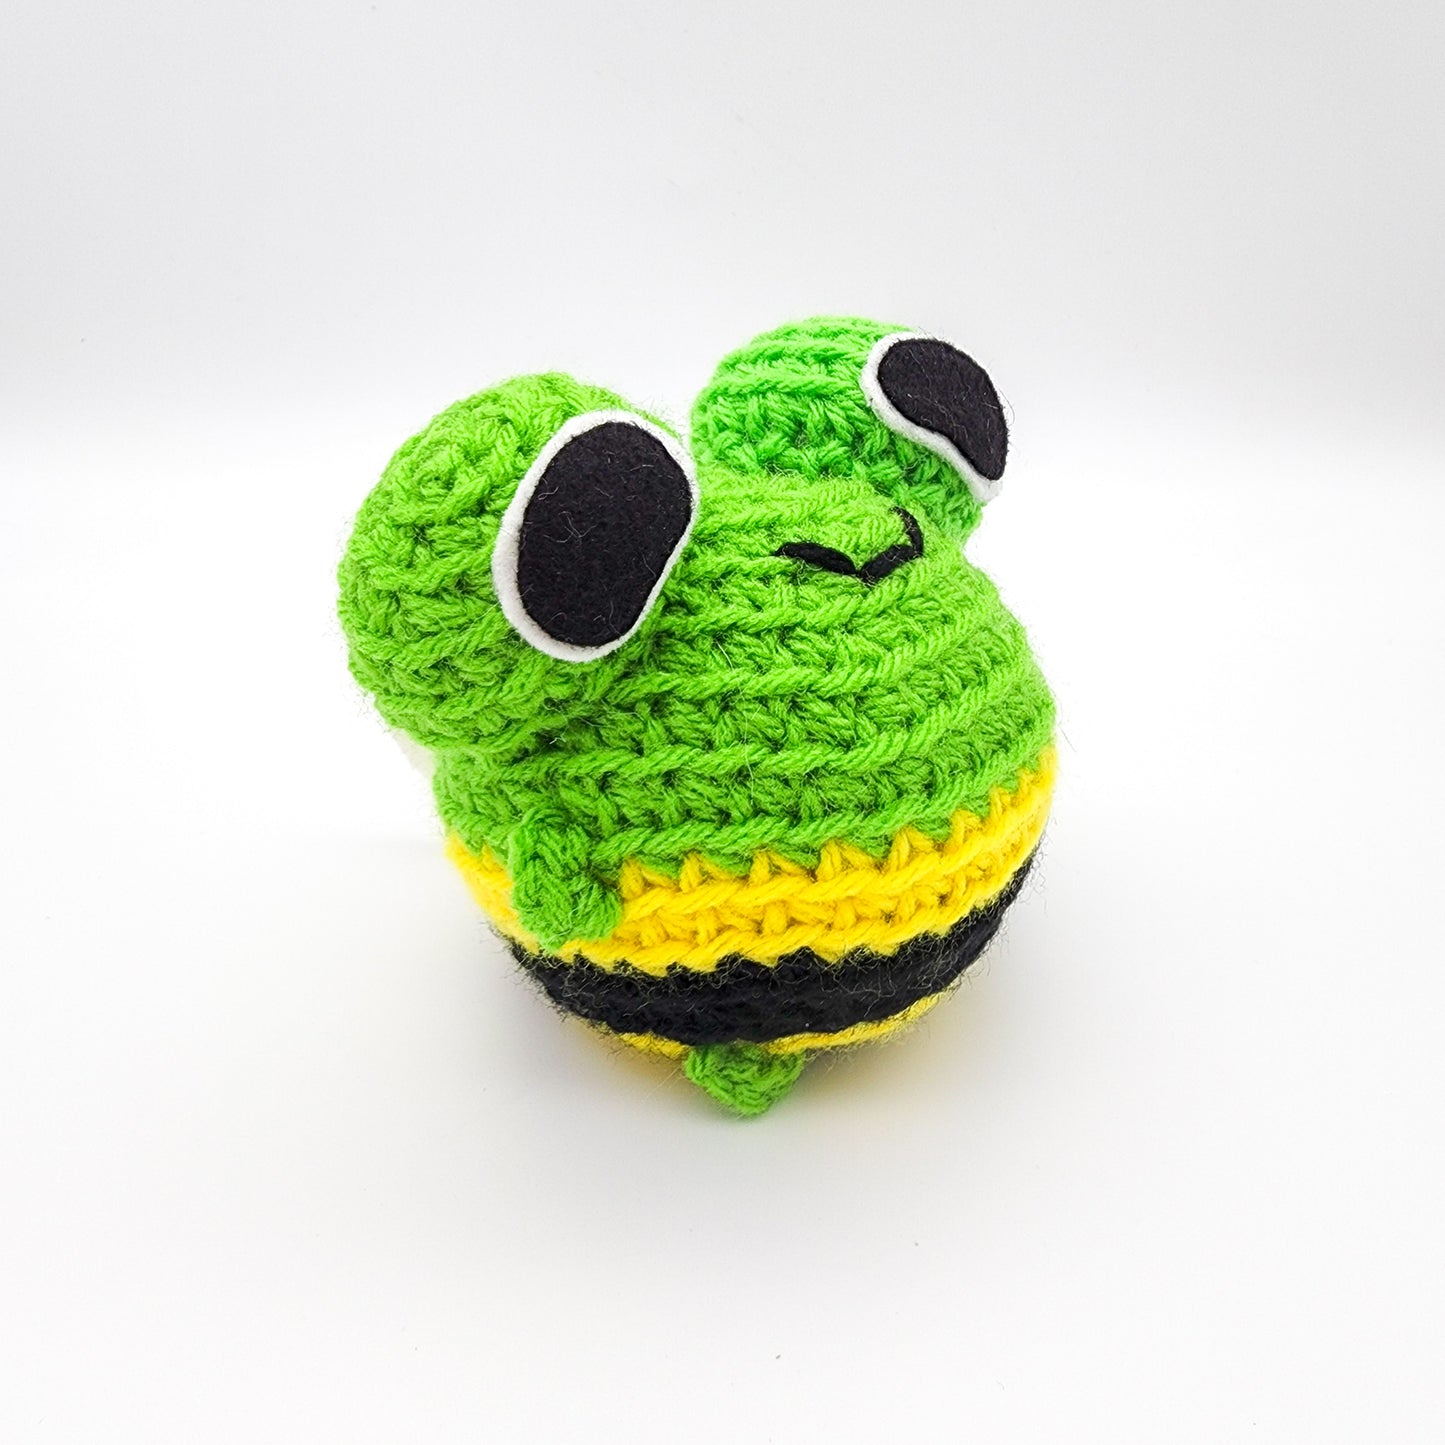 Bumble Froggy Plush